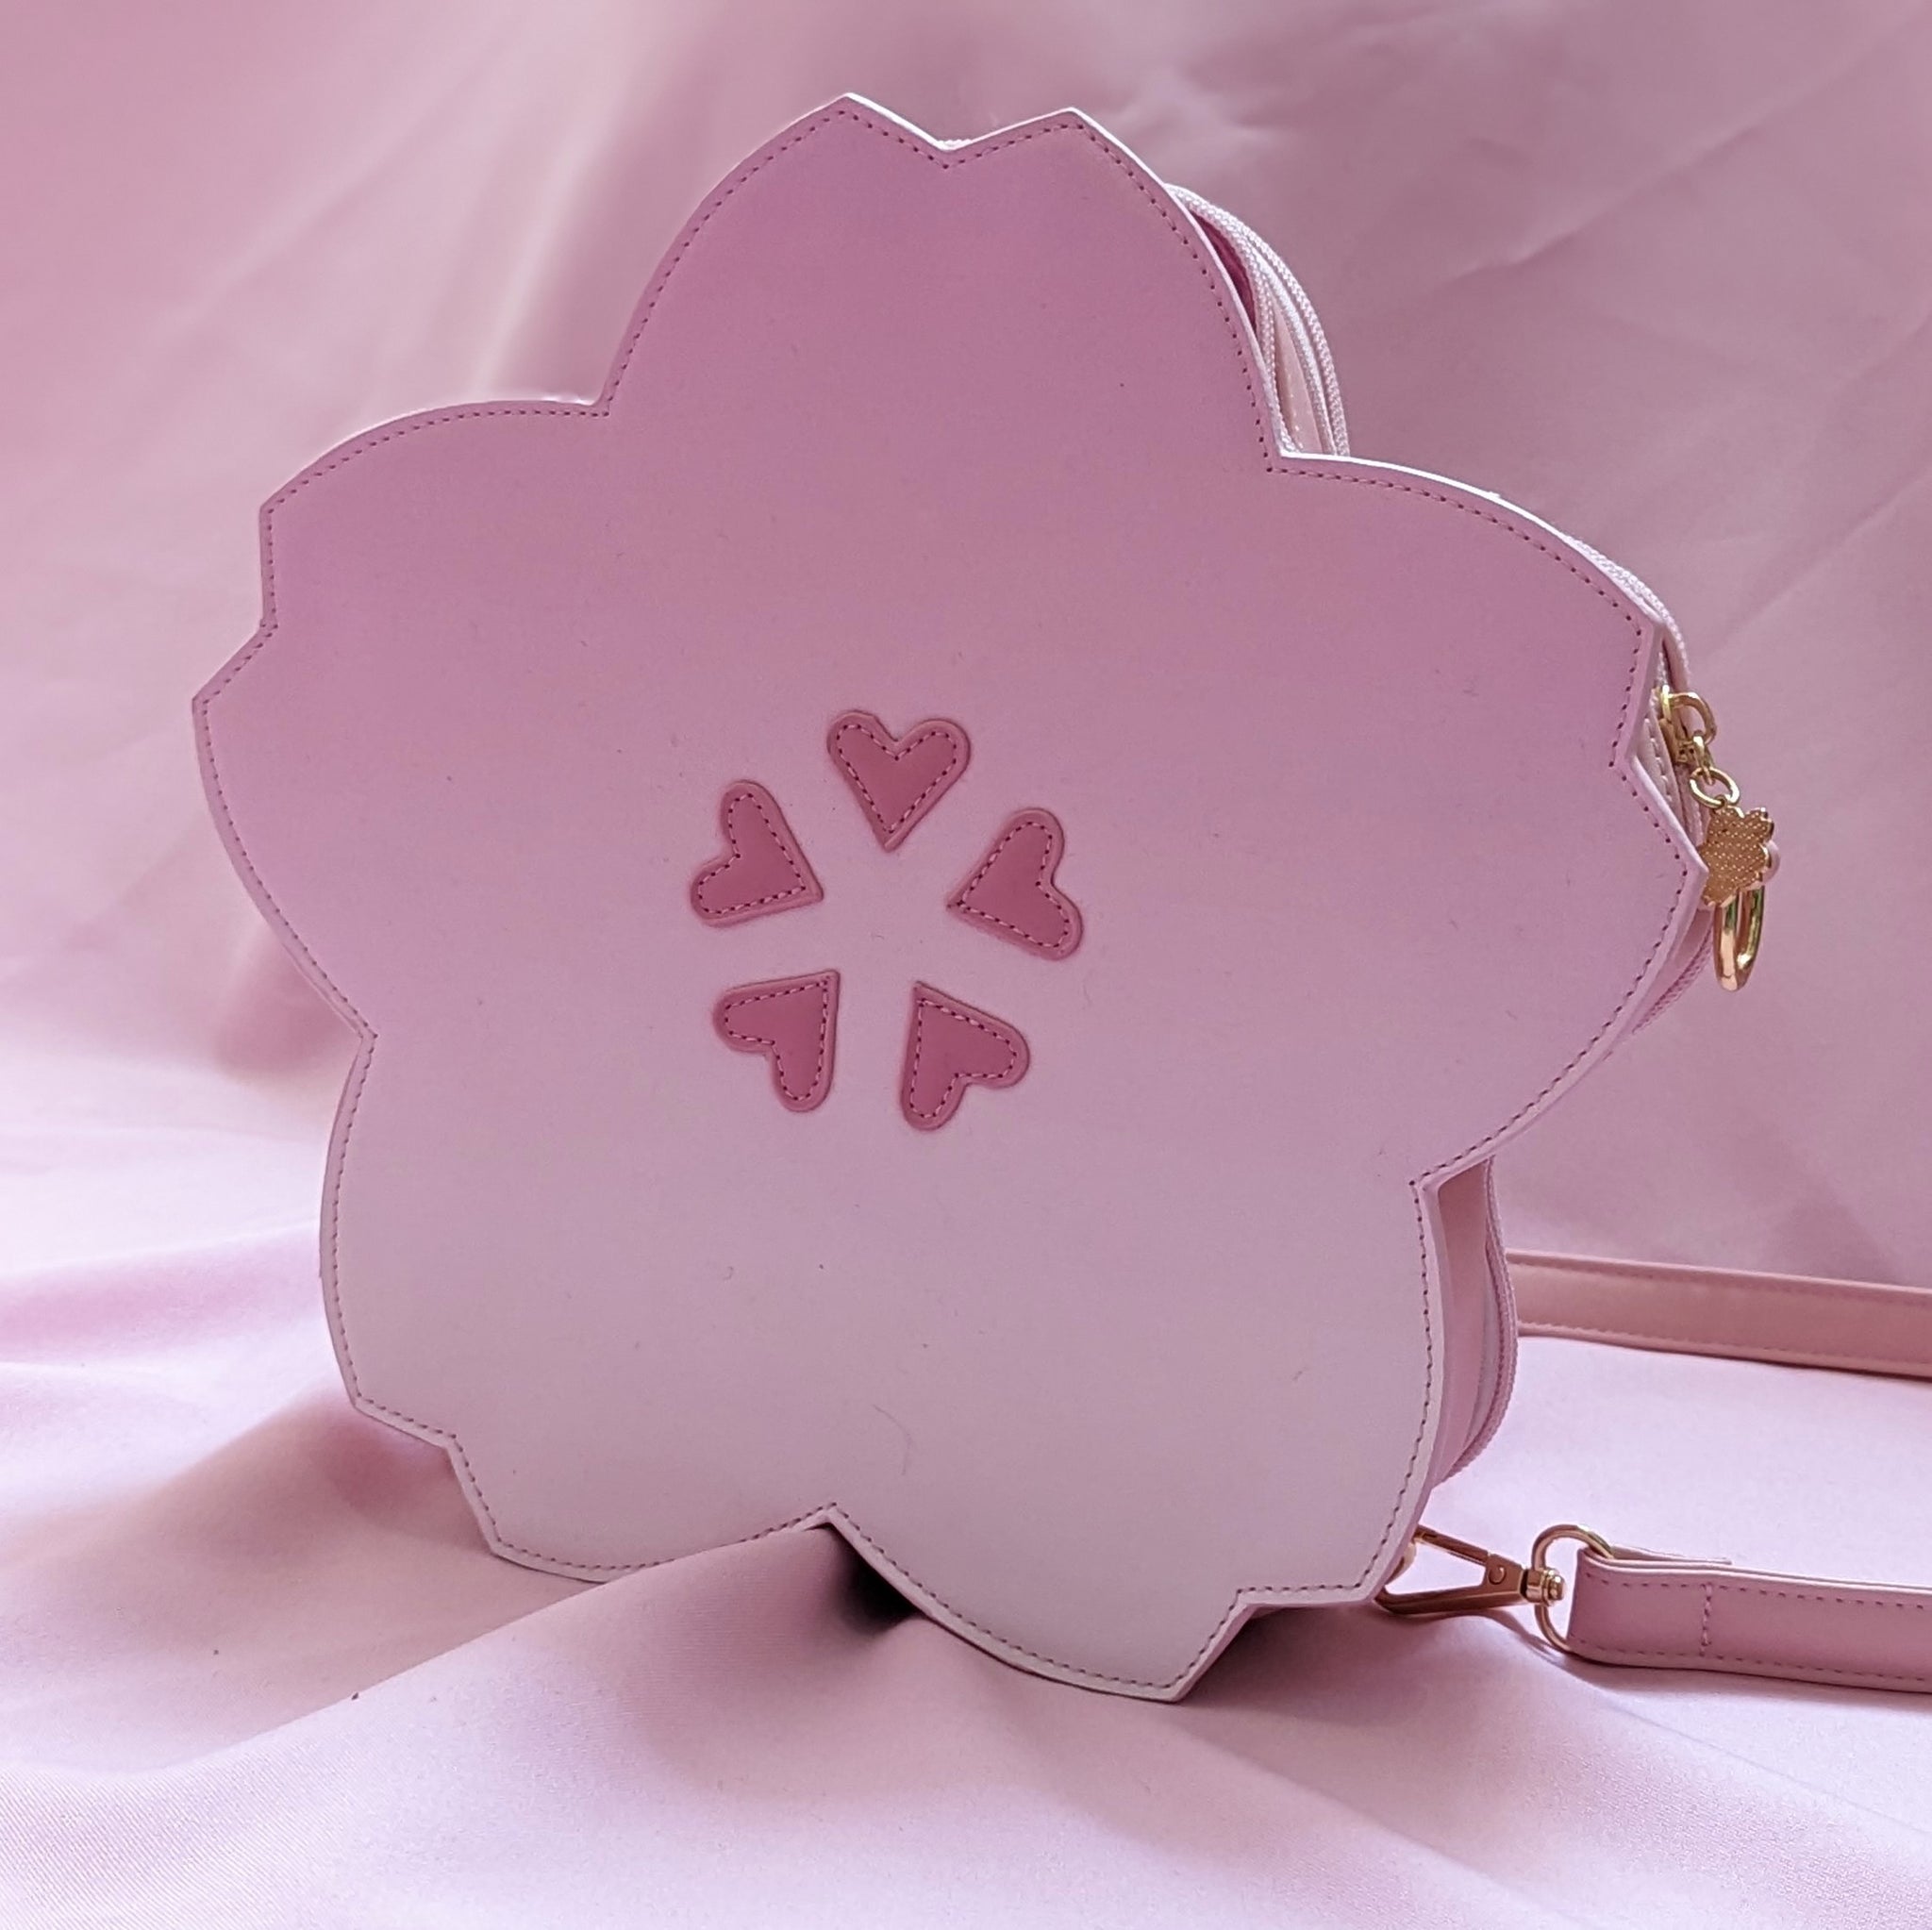 PRE ORDER Sakura Taiwan Cherry Blossom Powder Pink Bag – Yvonne12785